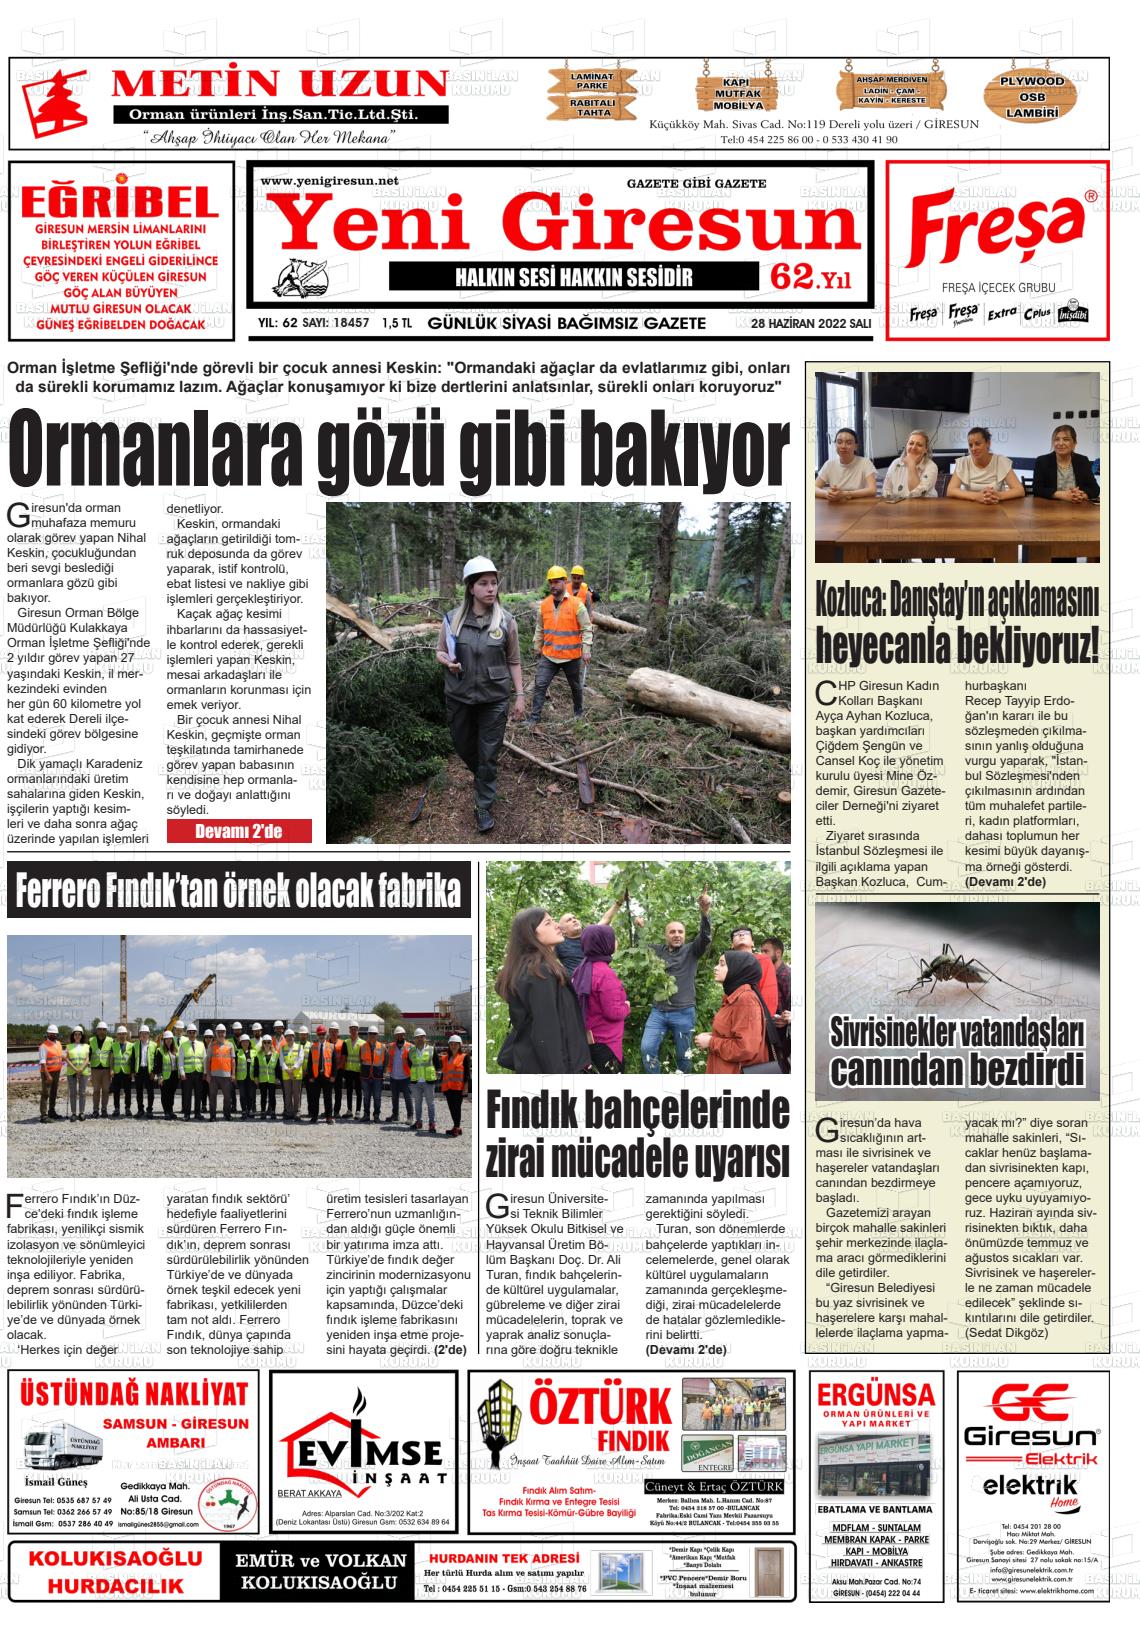 28 Haziran 2022 Yeni Giresun Gazete Manşeti